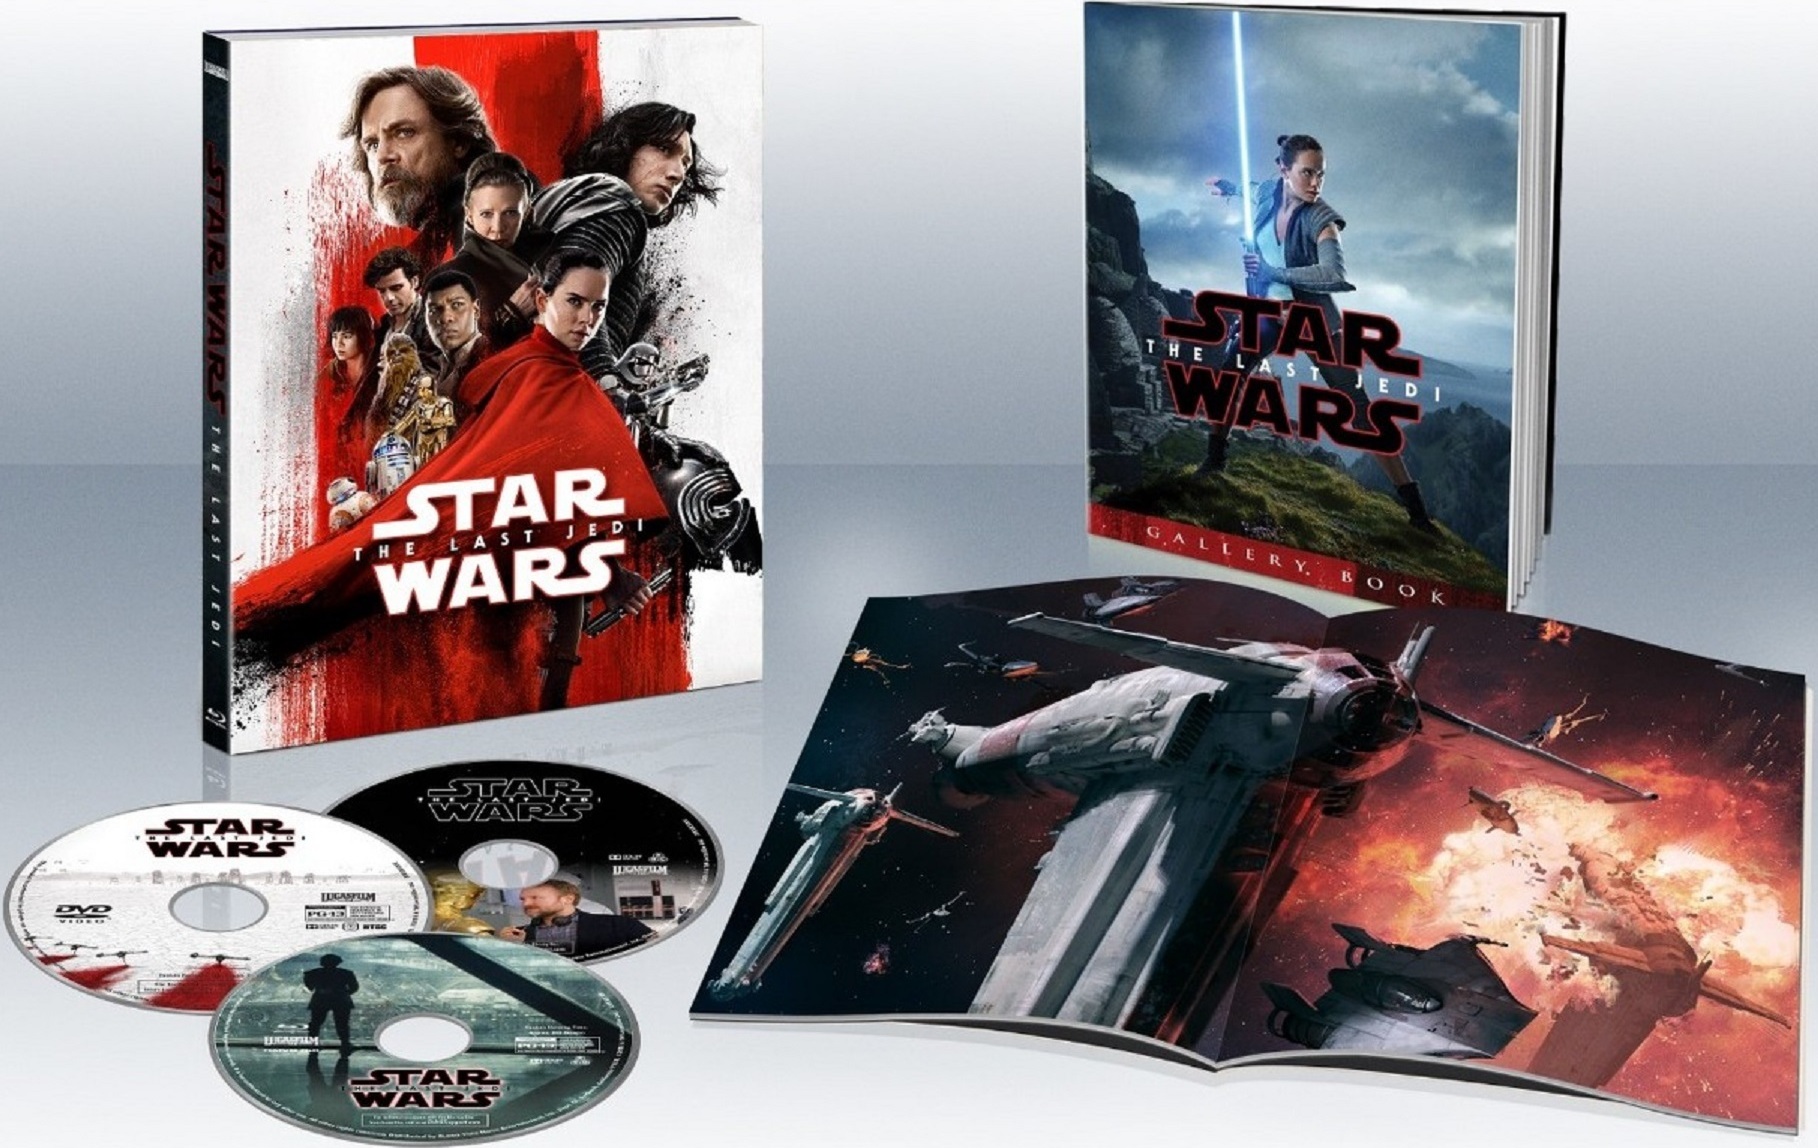 Star Wars Ep. VIII: The Last Jedi download the new